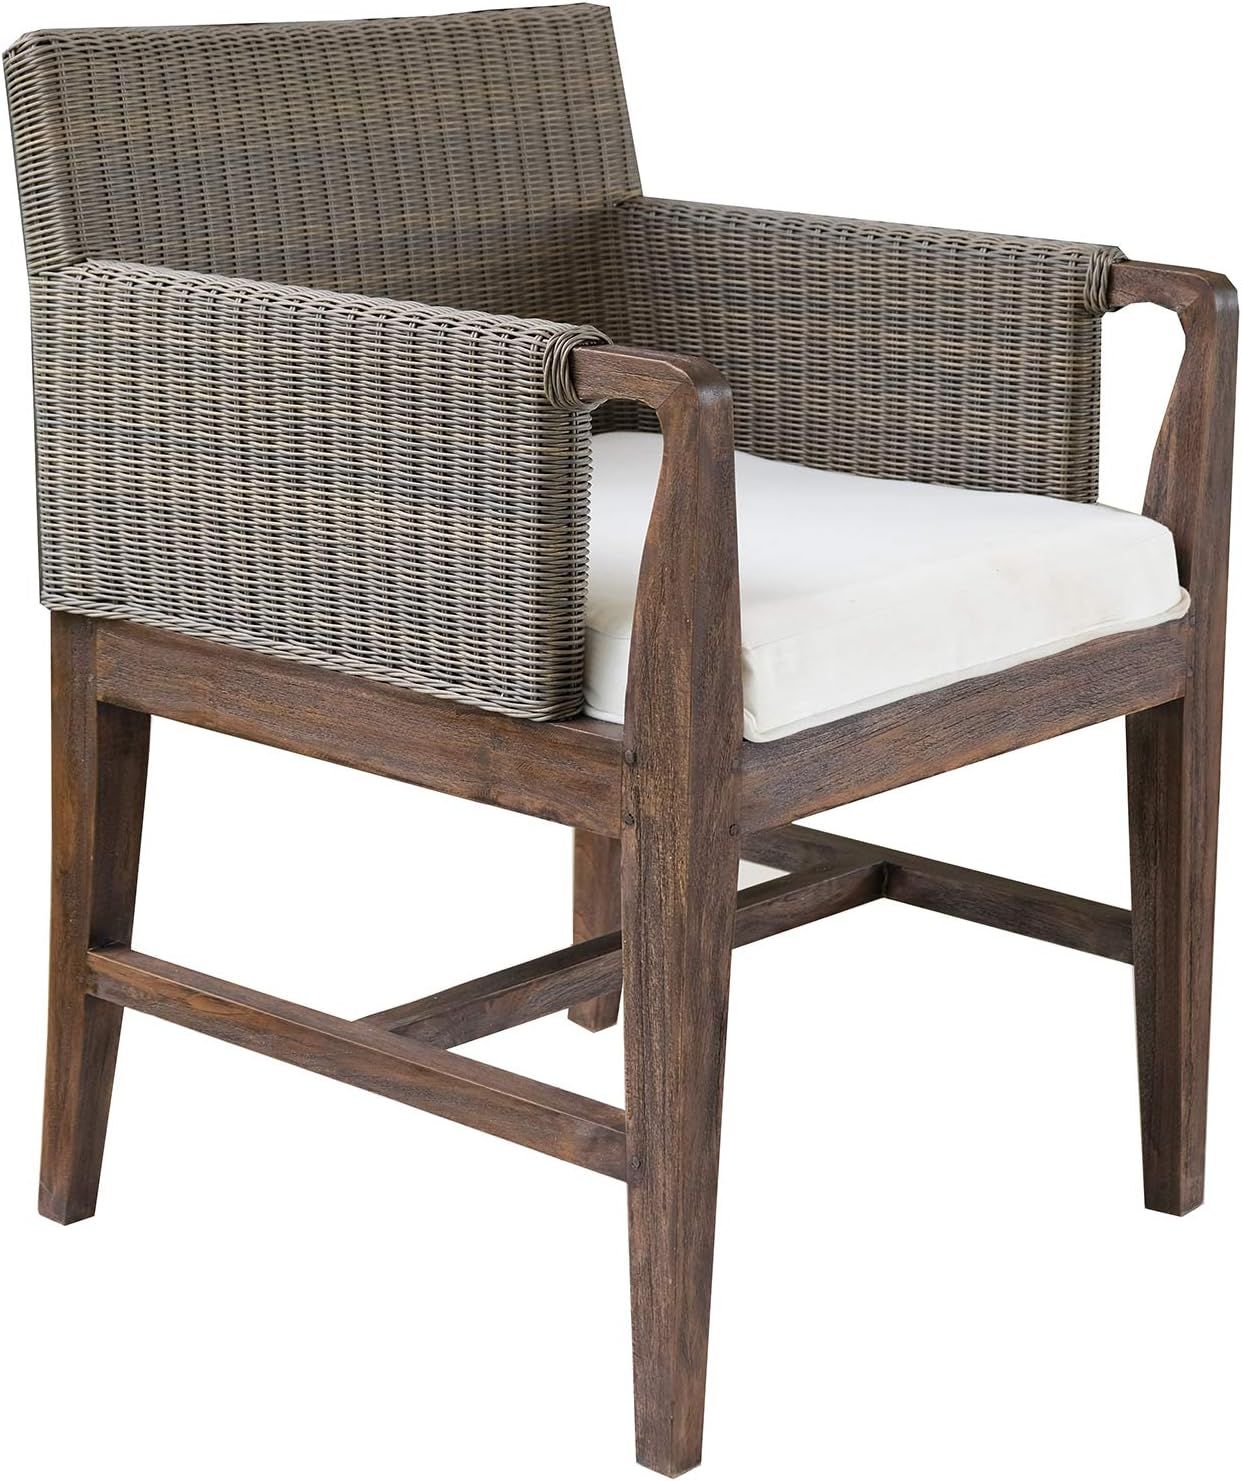 Alveare Home 9741-738 Gorda Outdoor Teak Patio Chair, Natural | Amazon (US)